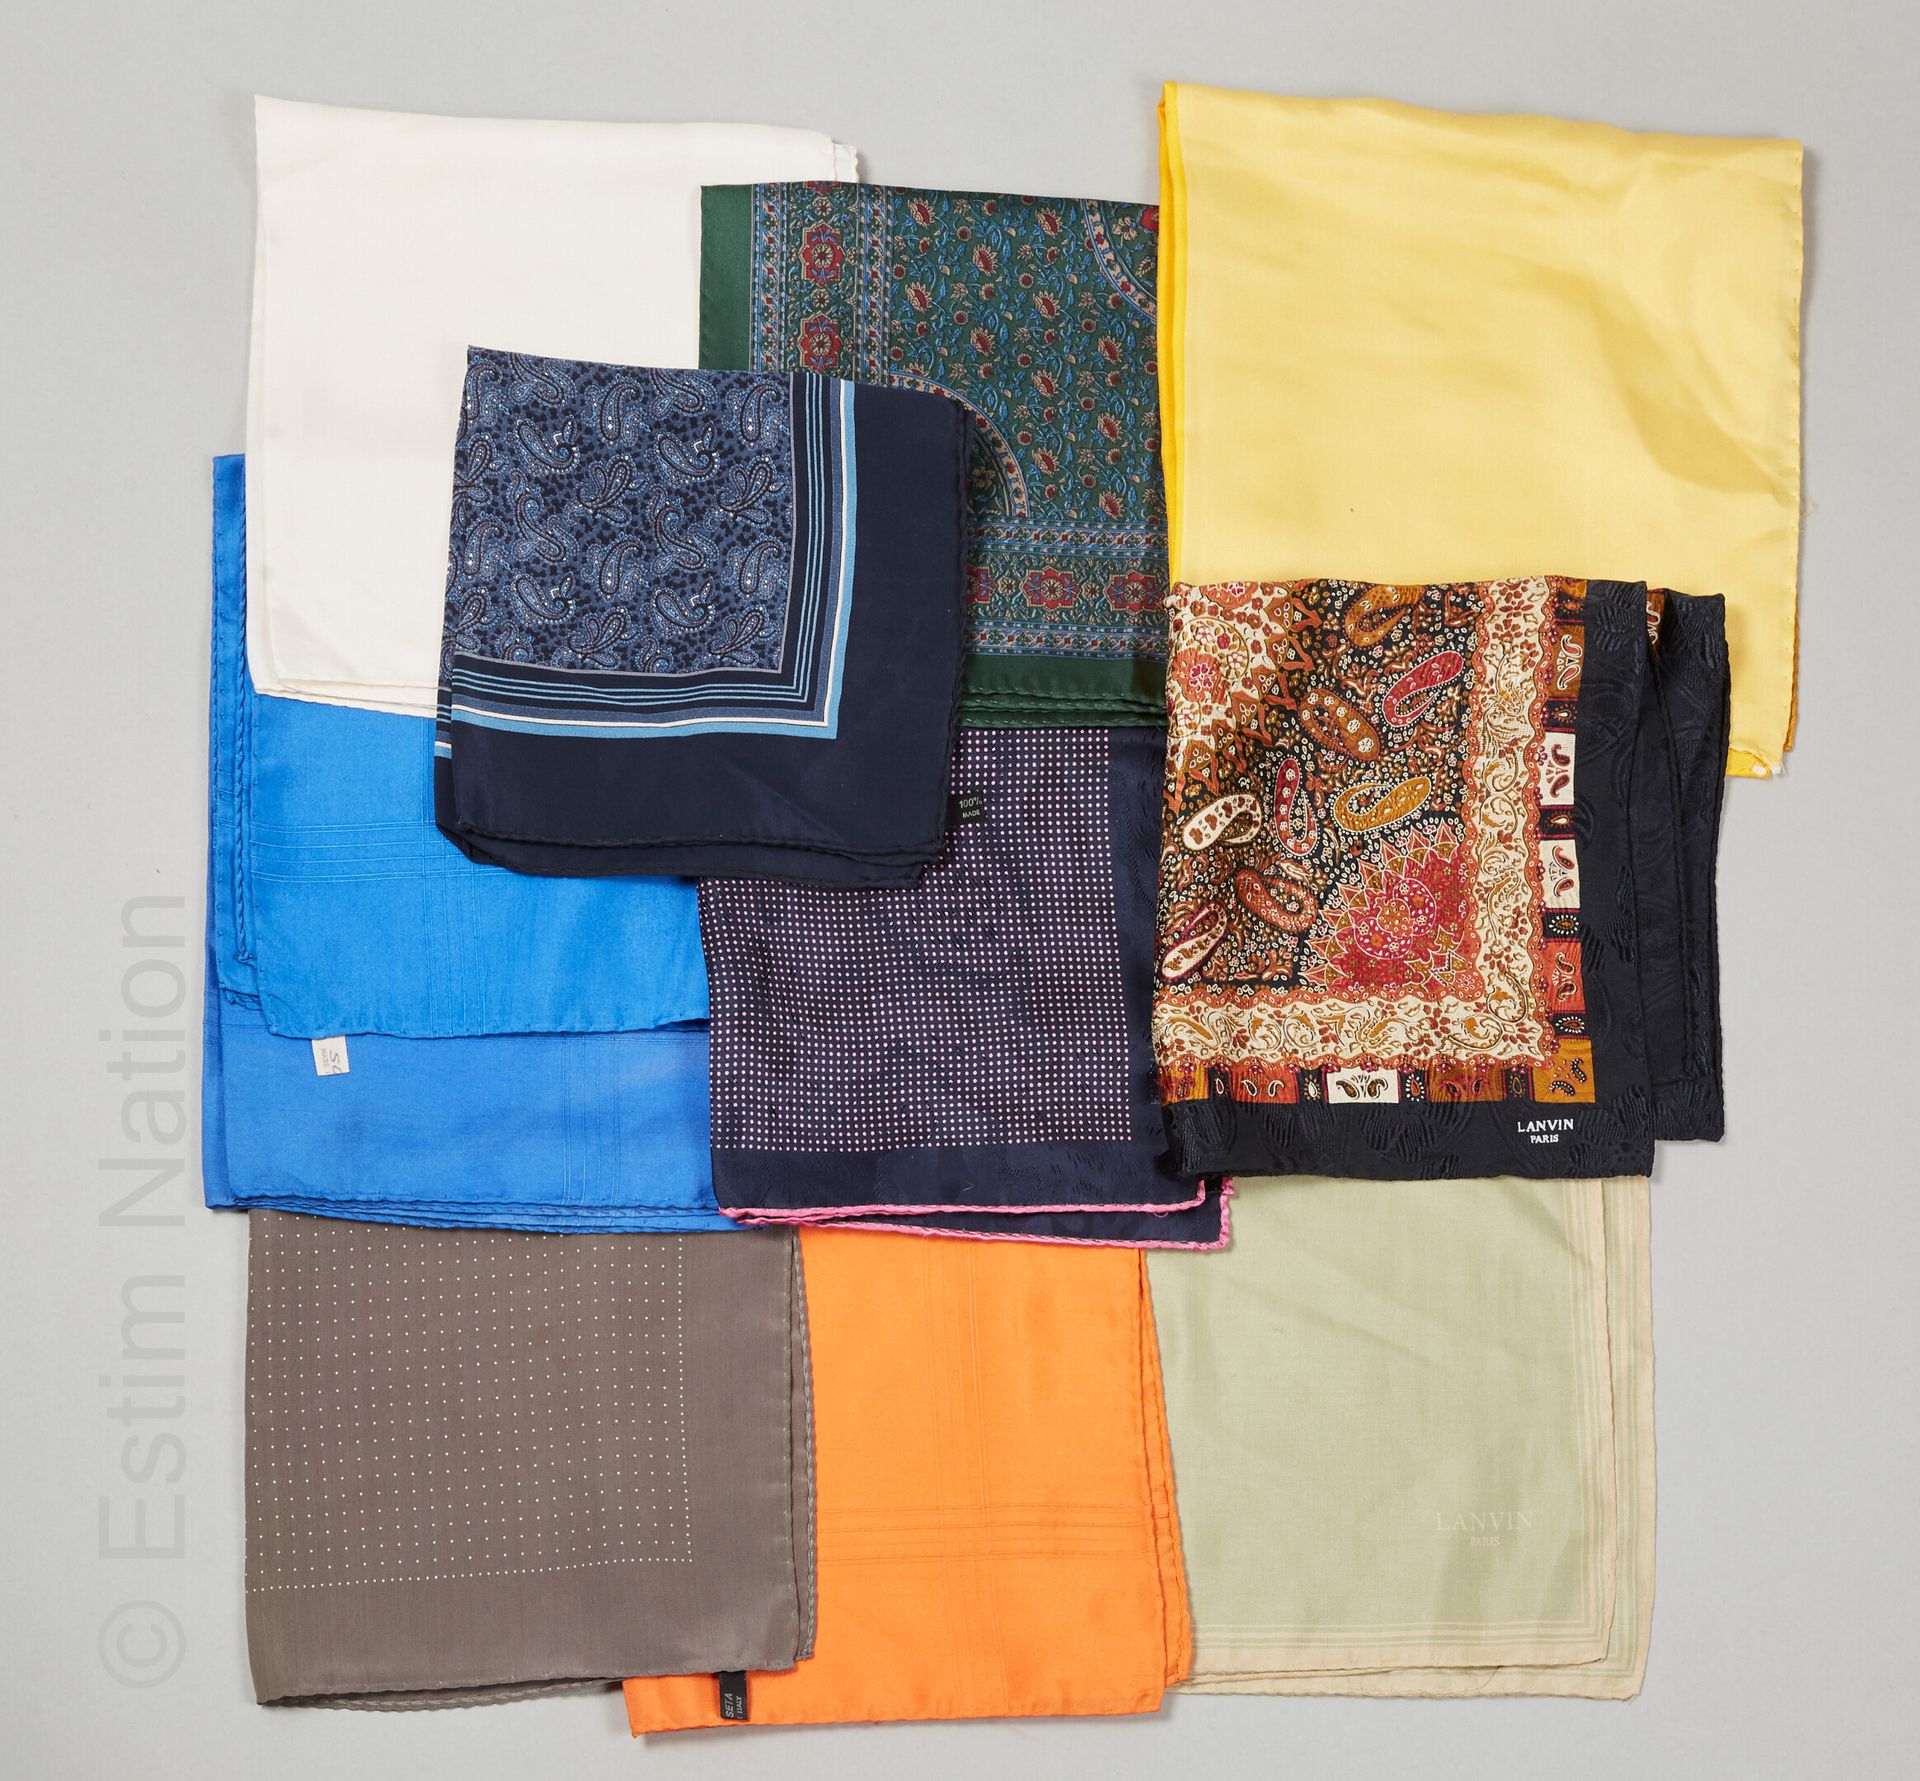 LANVIN TEN POCKETS AND POCKETS in various printed silk (no guarantee of conditio&hellip;